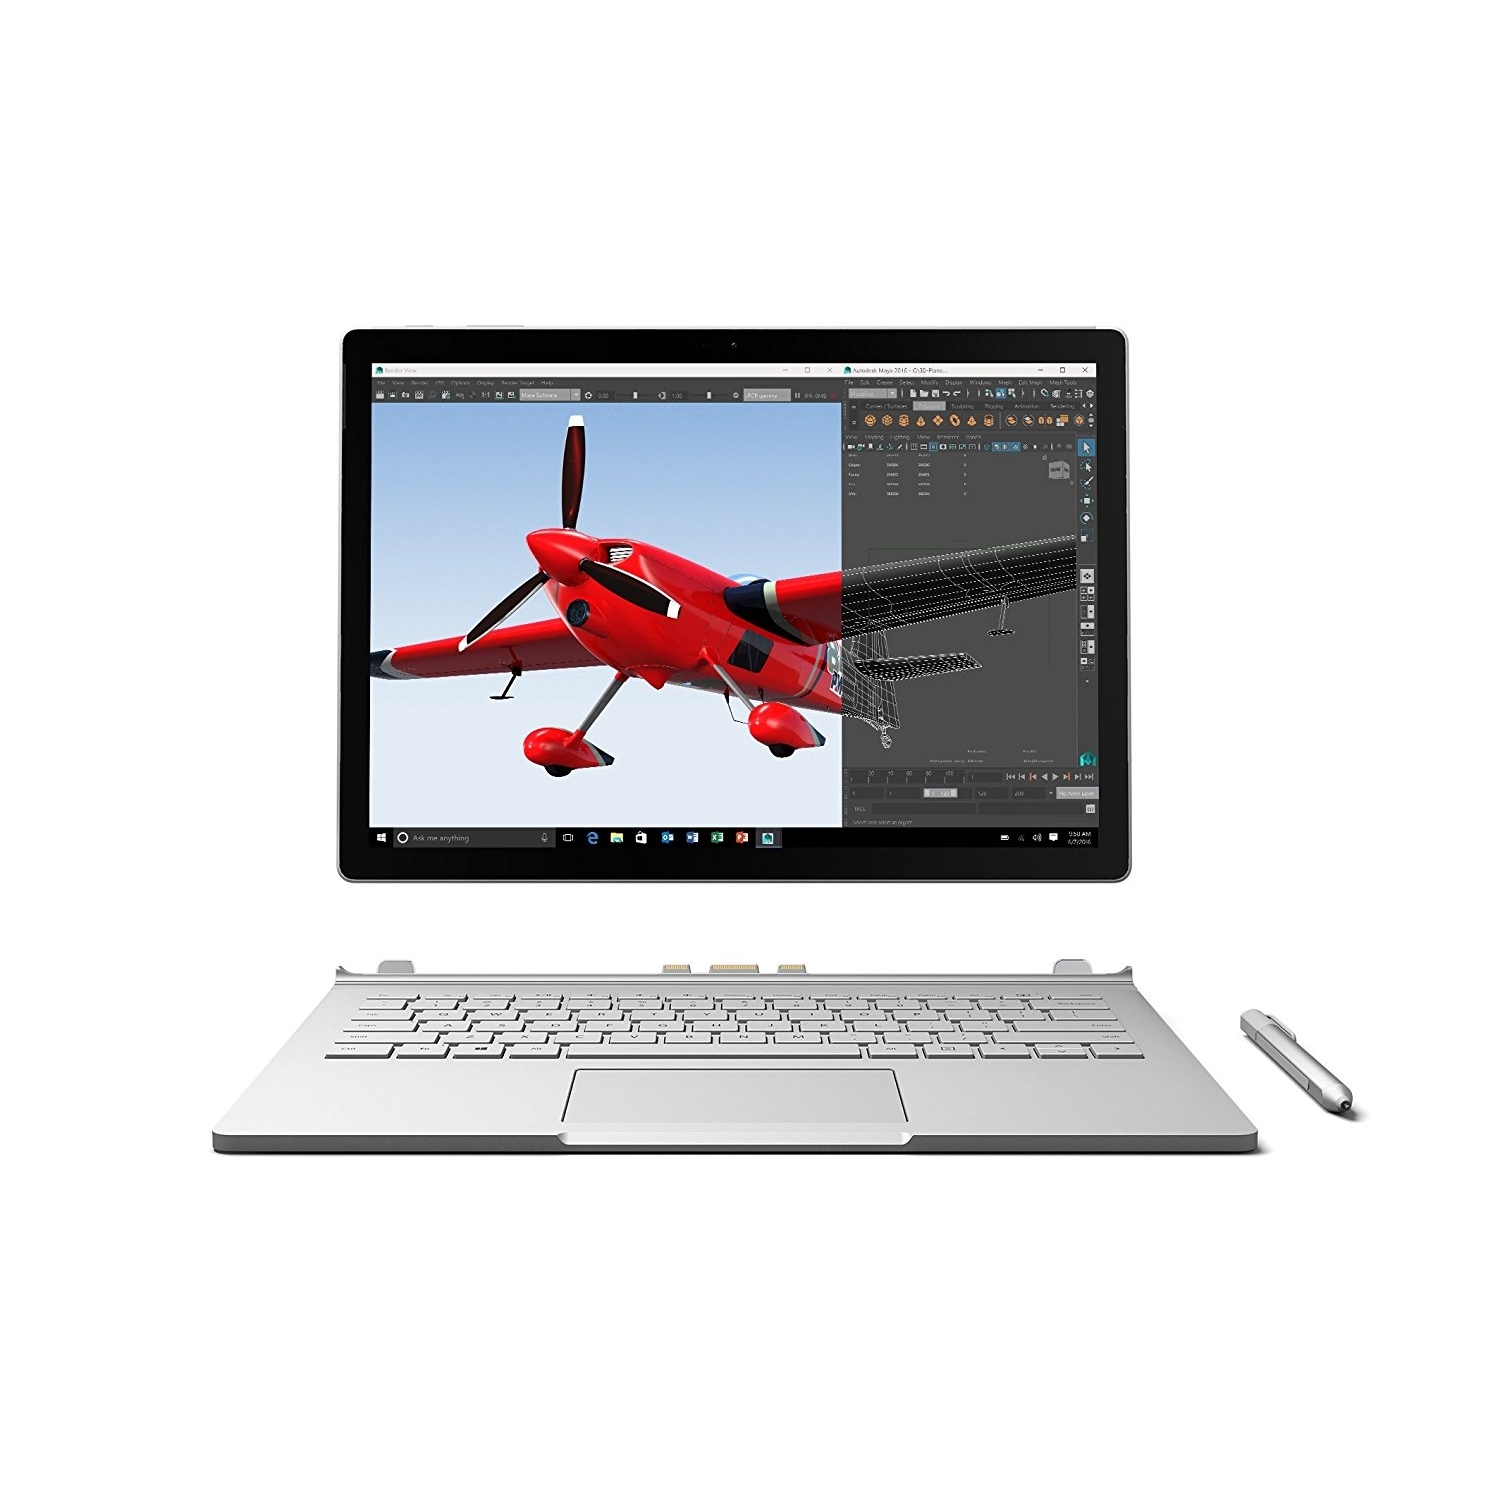 Microsoft Refurbished Microsoft Surface Book 256GB Intel Core i7-6600U X2 2.6GHz 13.5", Silver (Certified Refurbished)